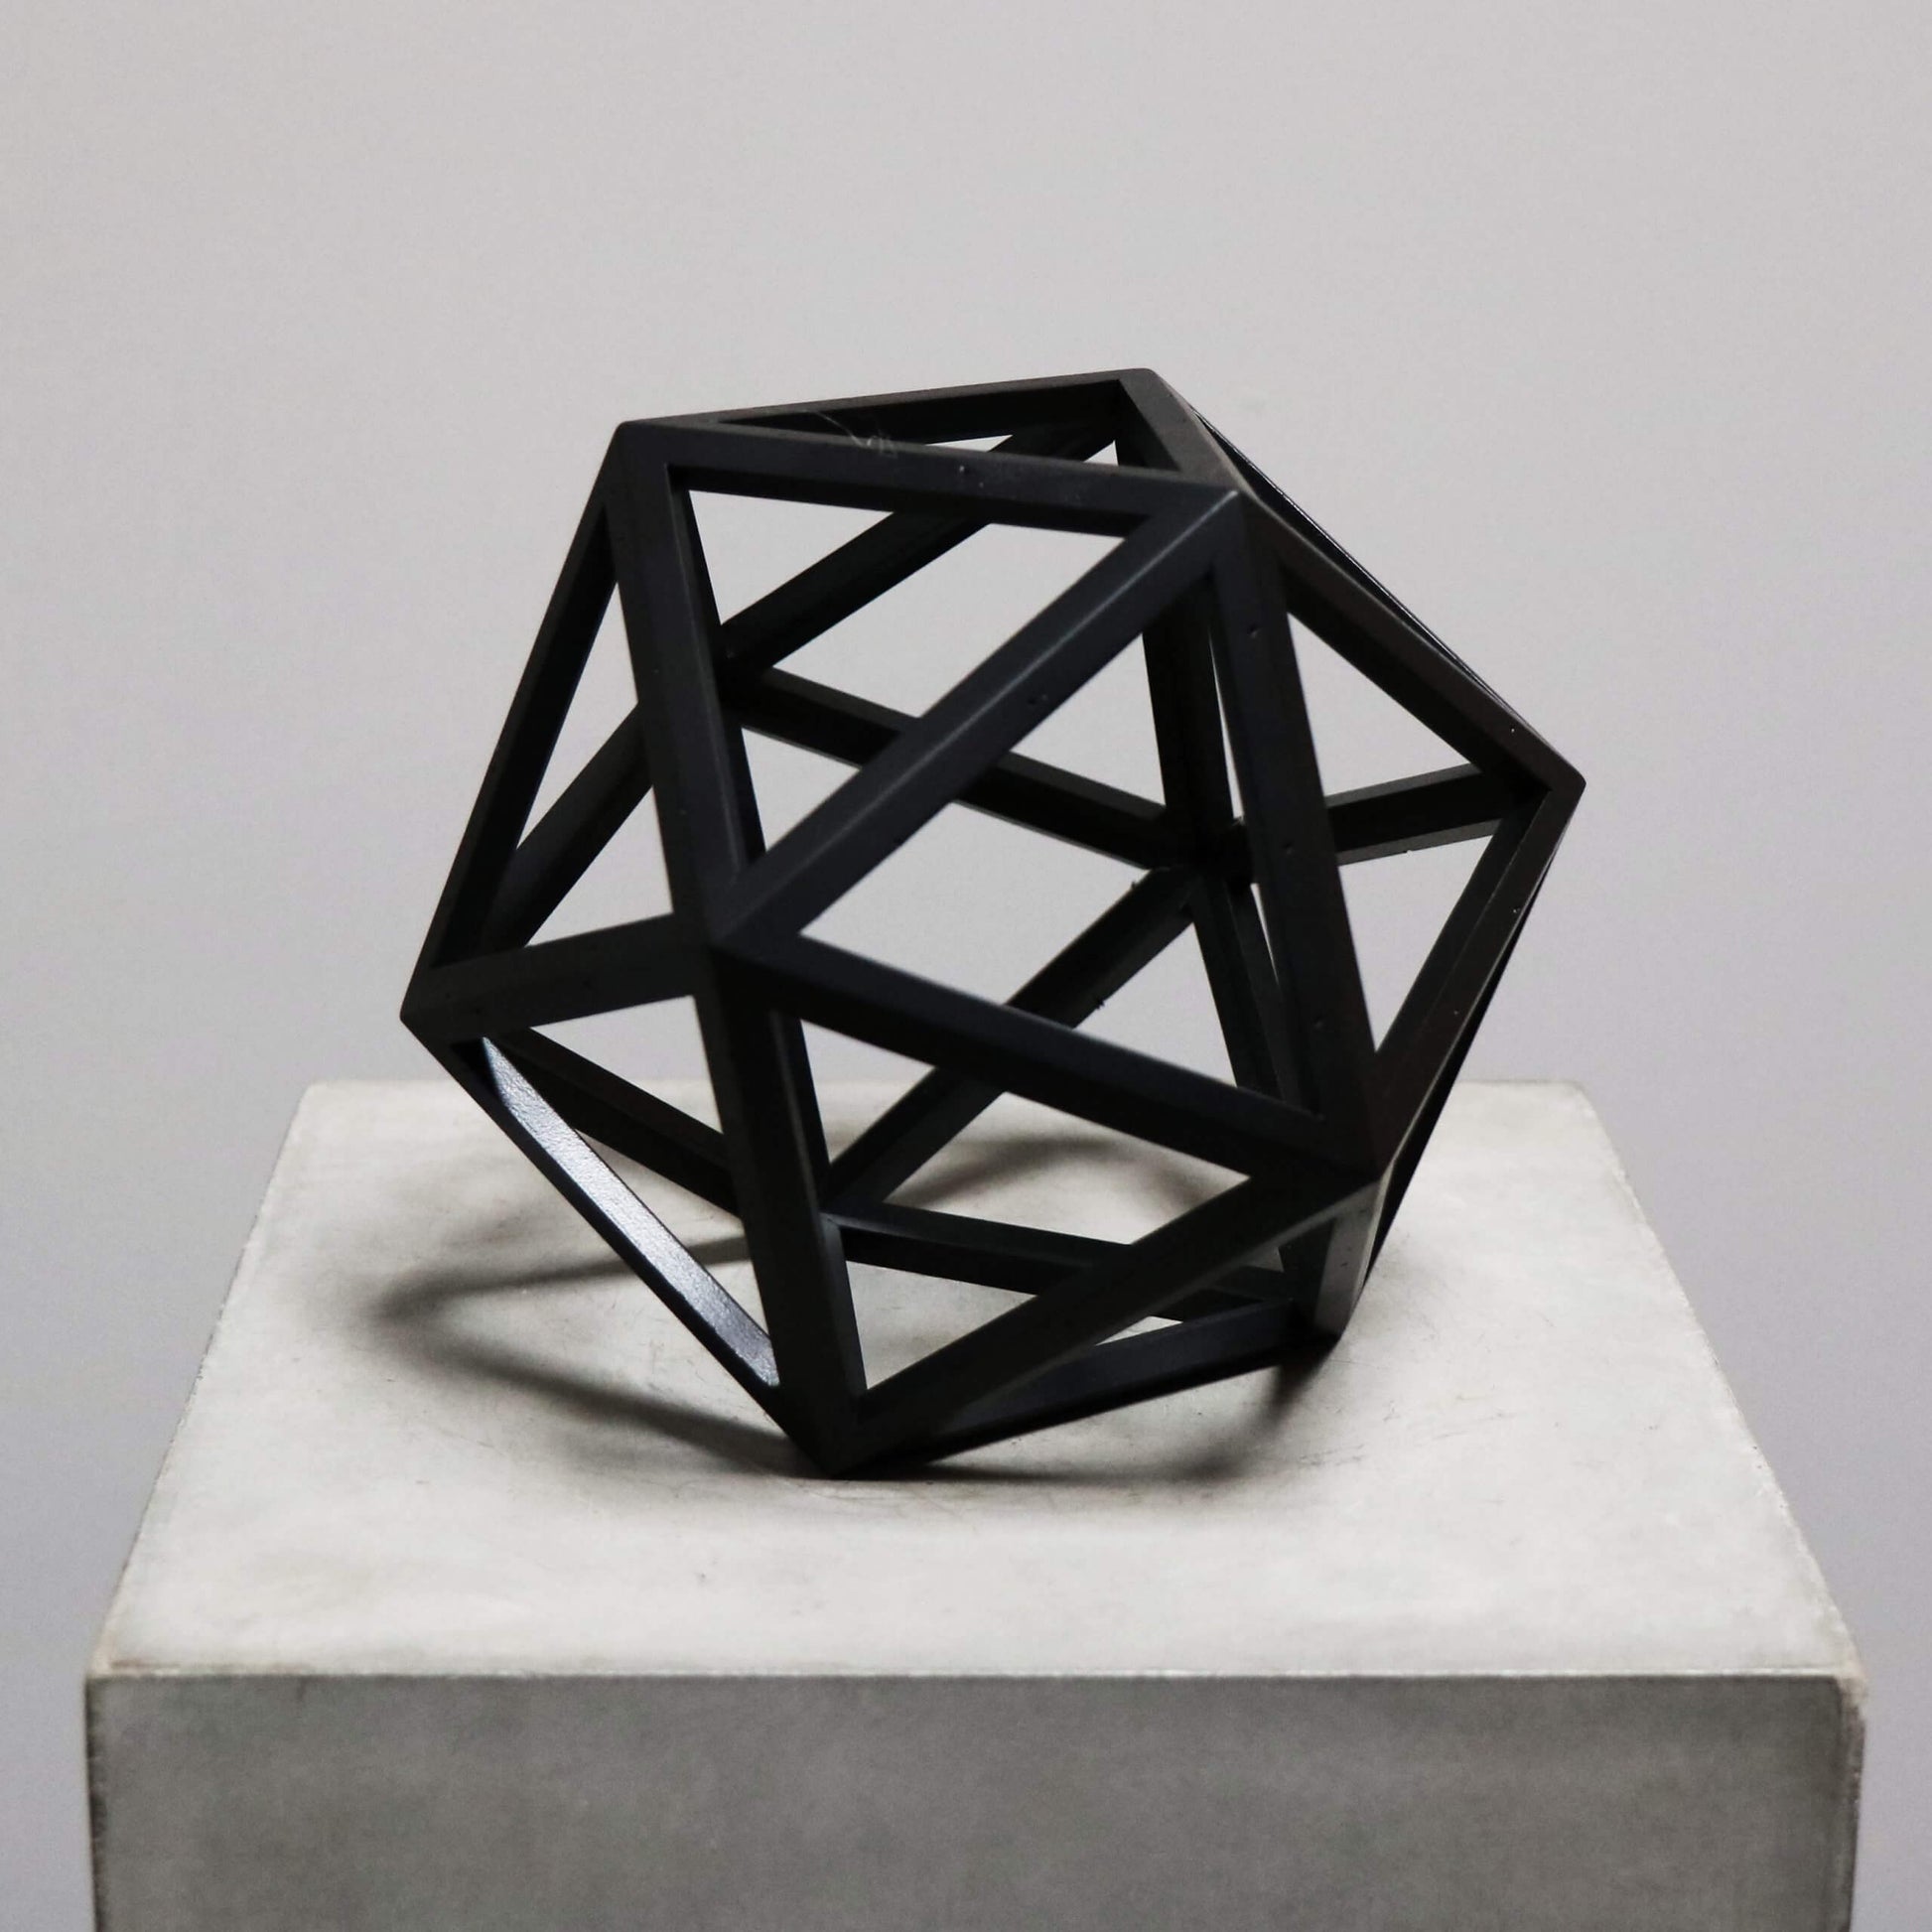 Beautiful geometrical model in burnt black wood for interior design decoration - icosahedron